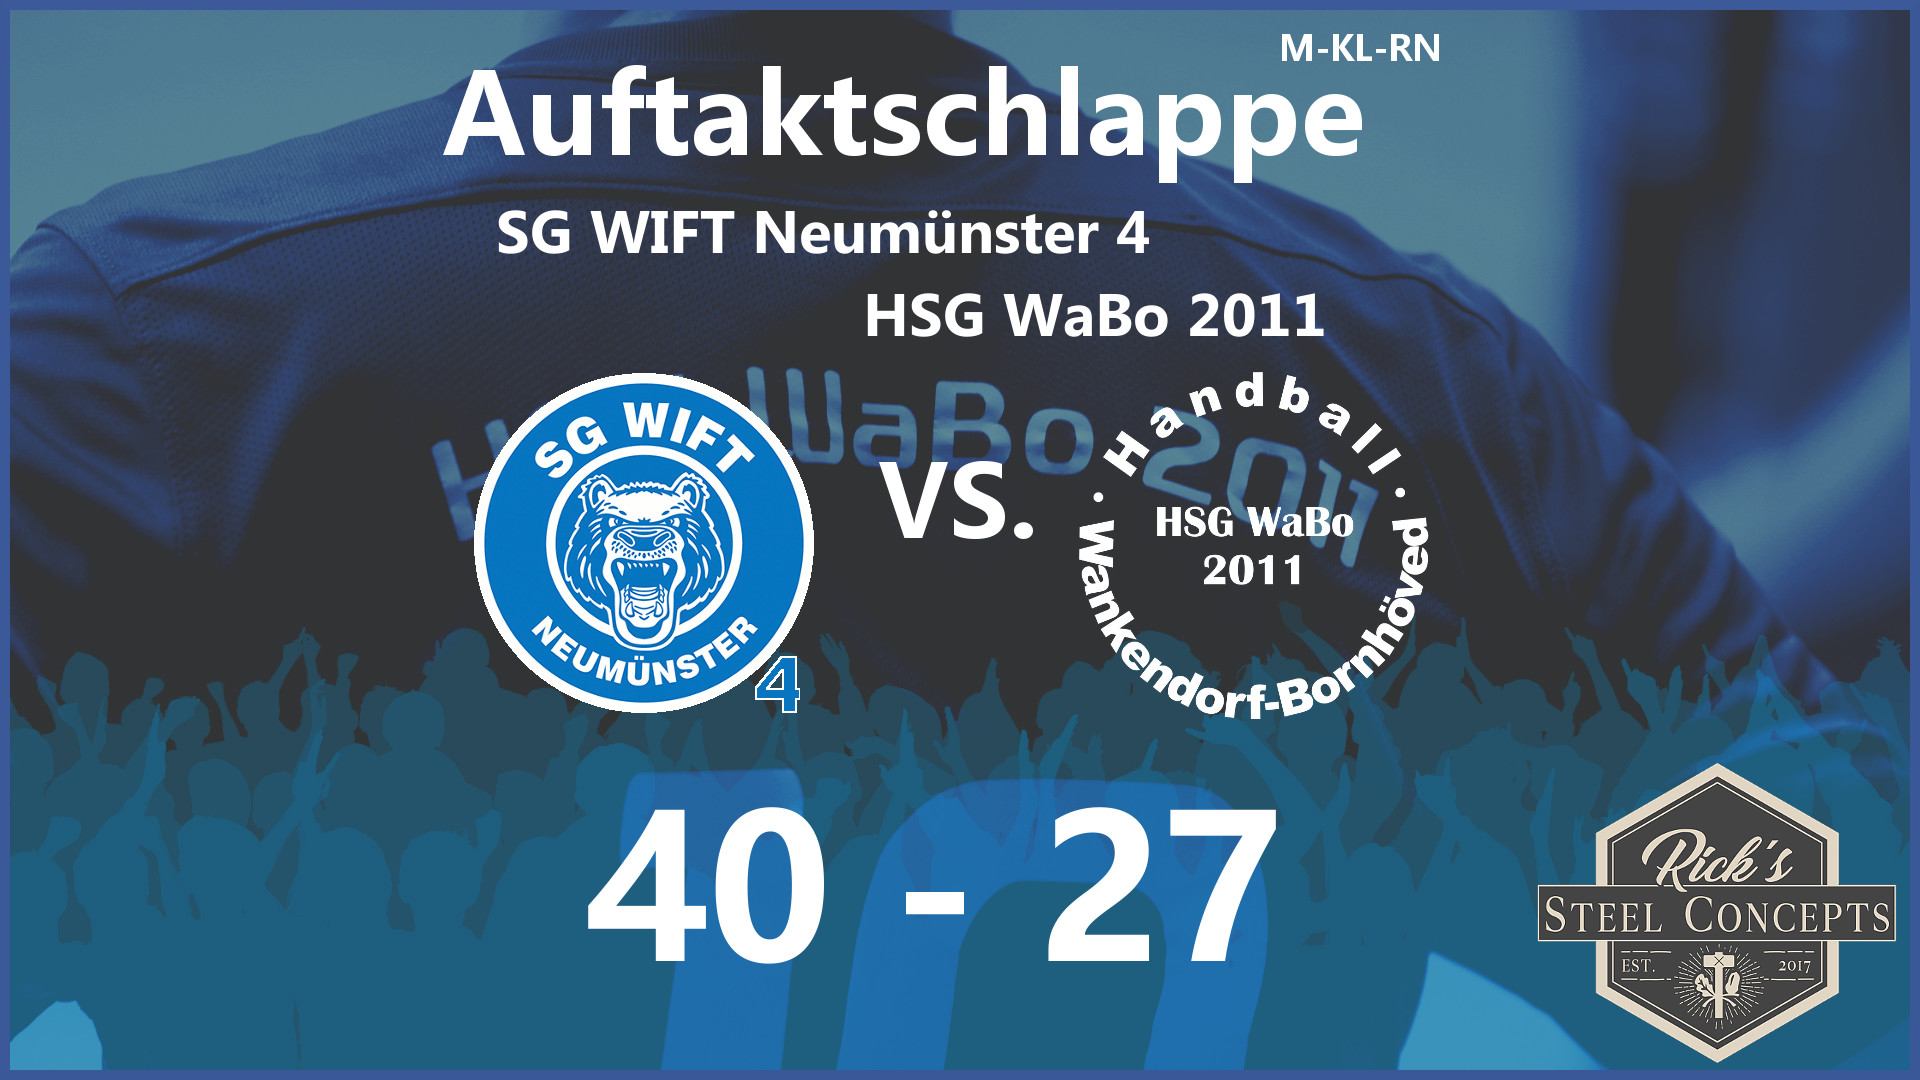 SG WIFT Neumünster 4 vs. HSG WaBo 2011